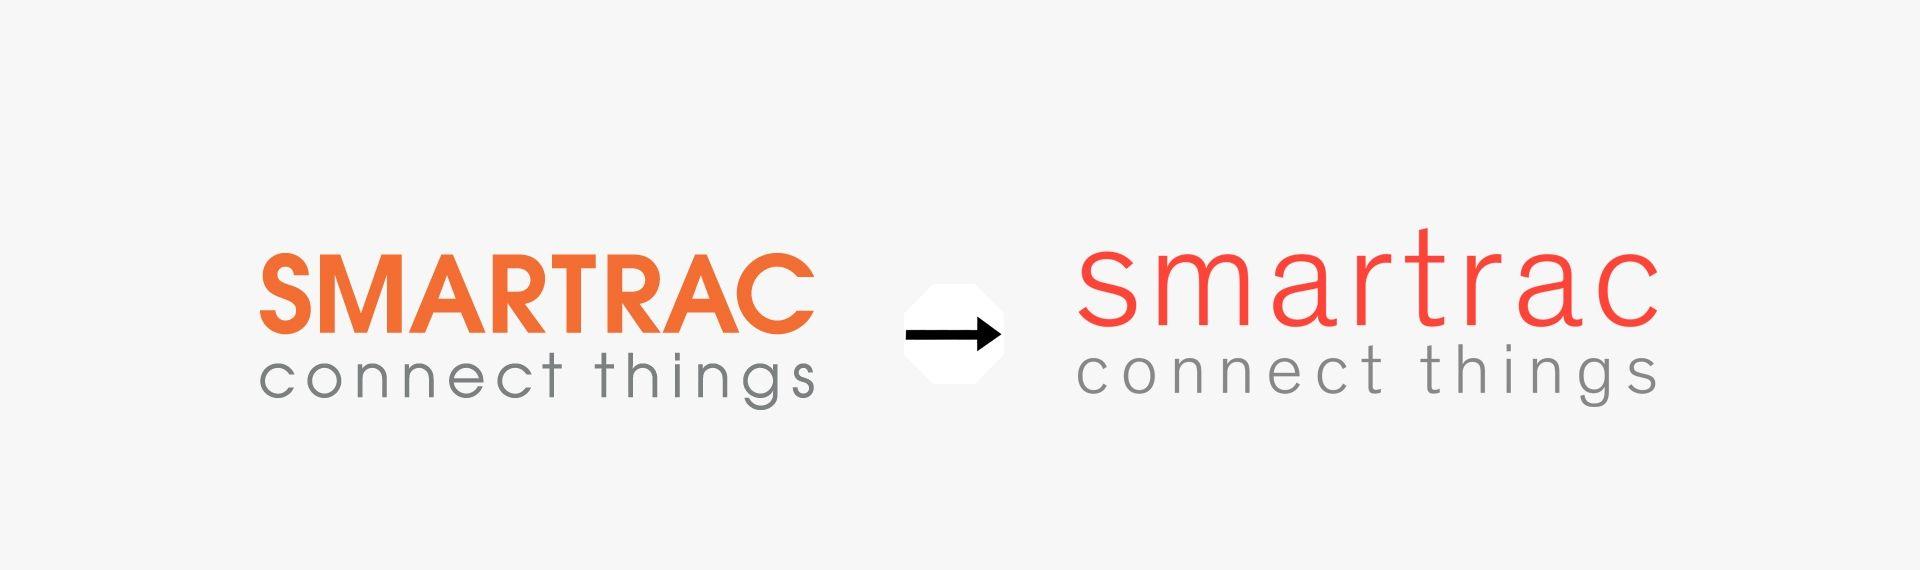 Orange Corporate Logo - Change depicted: Smartrac's New Logo and Corporate Design - Smartrac